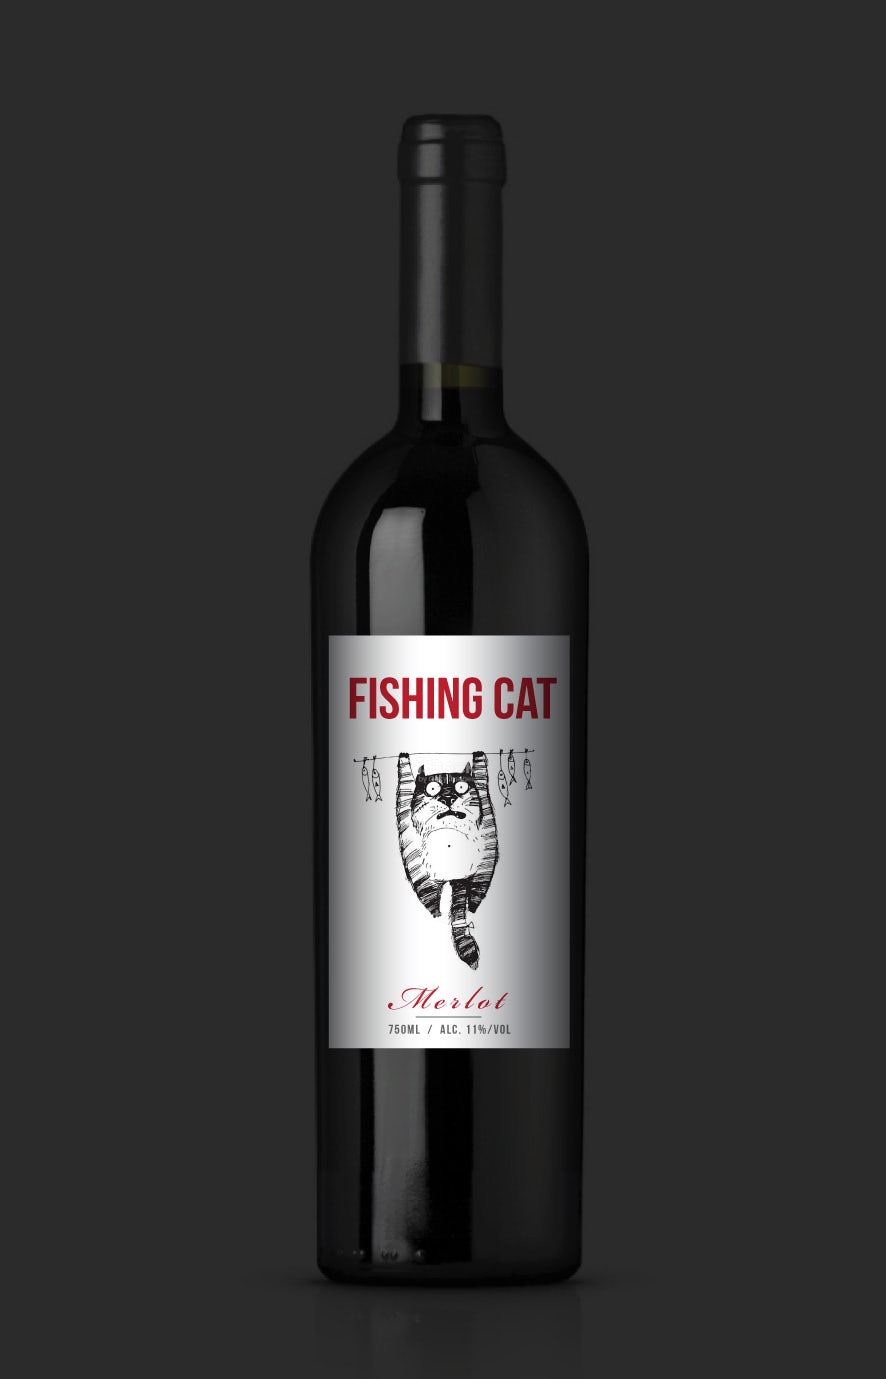 Fishing cat modern wine label